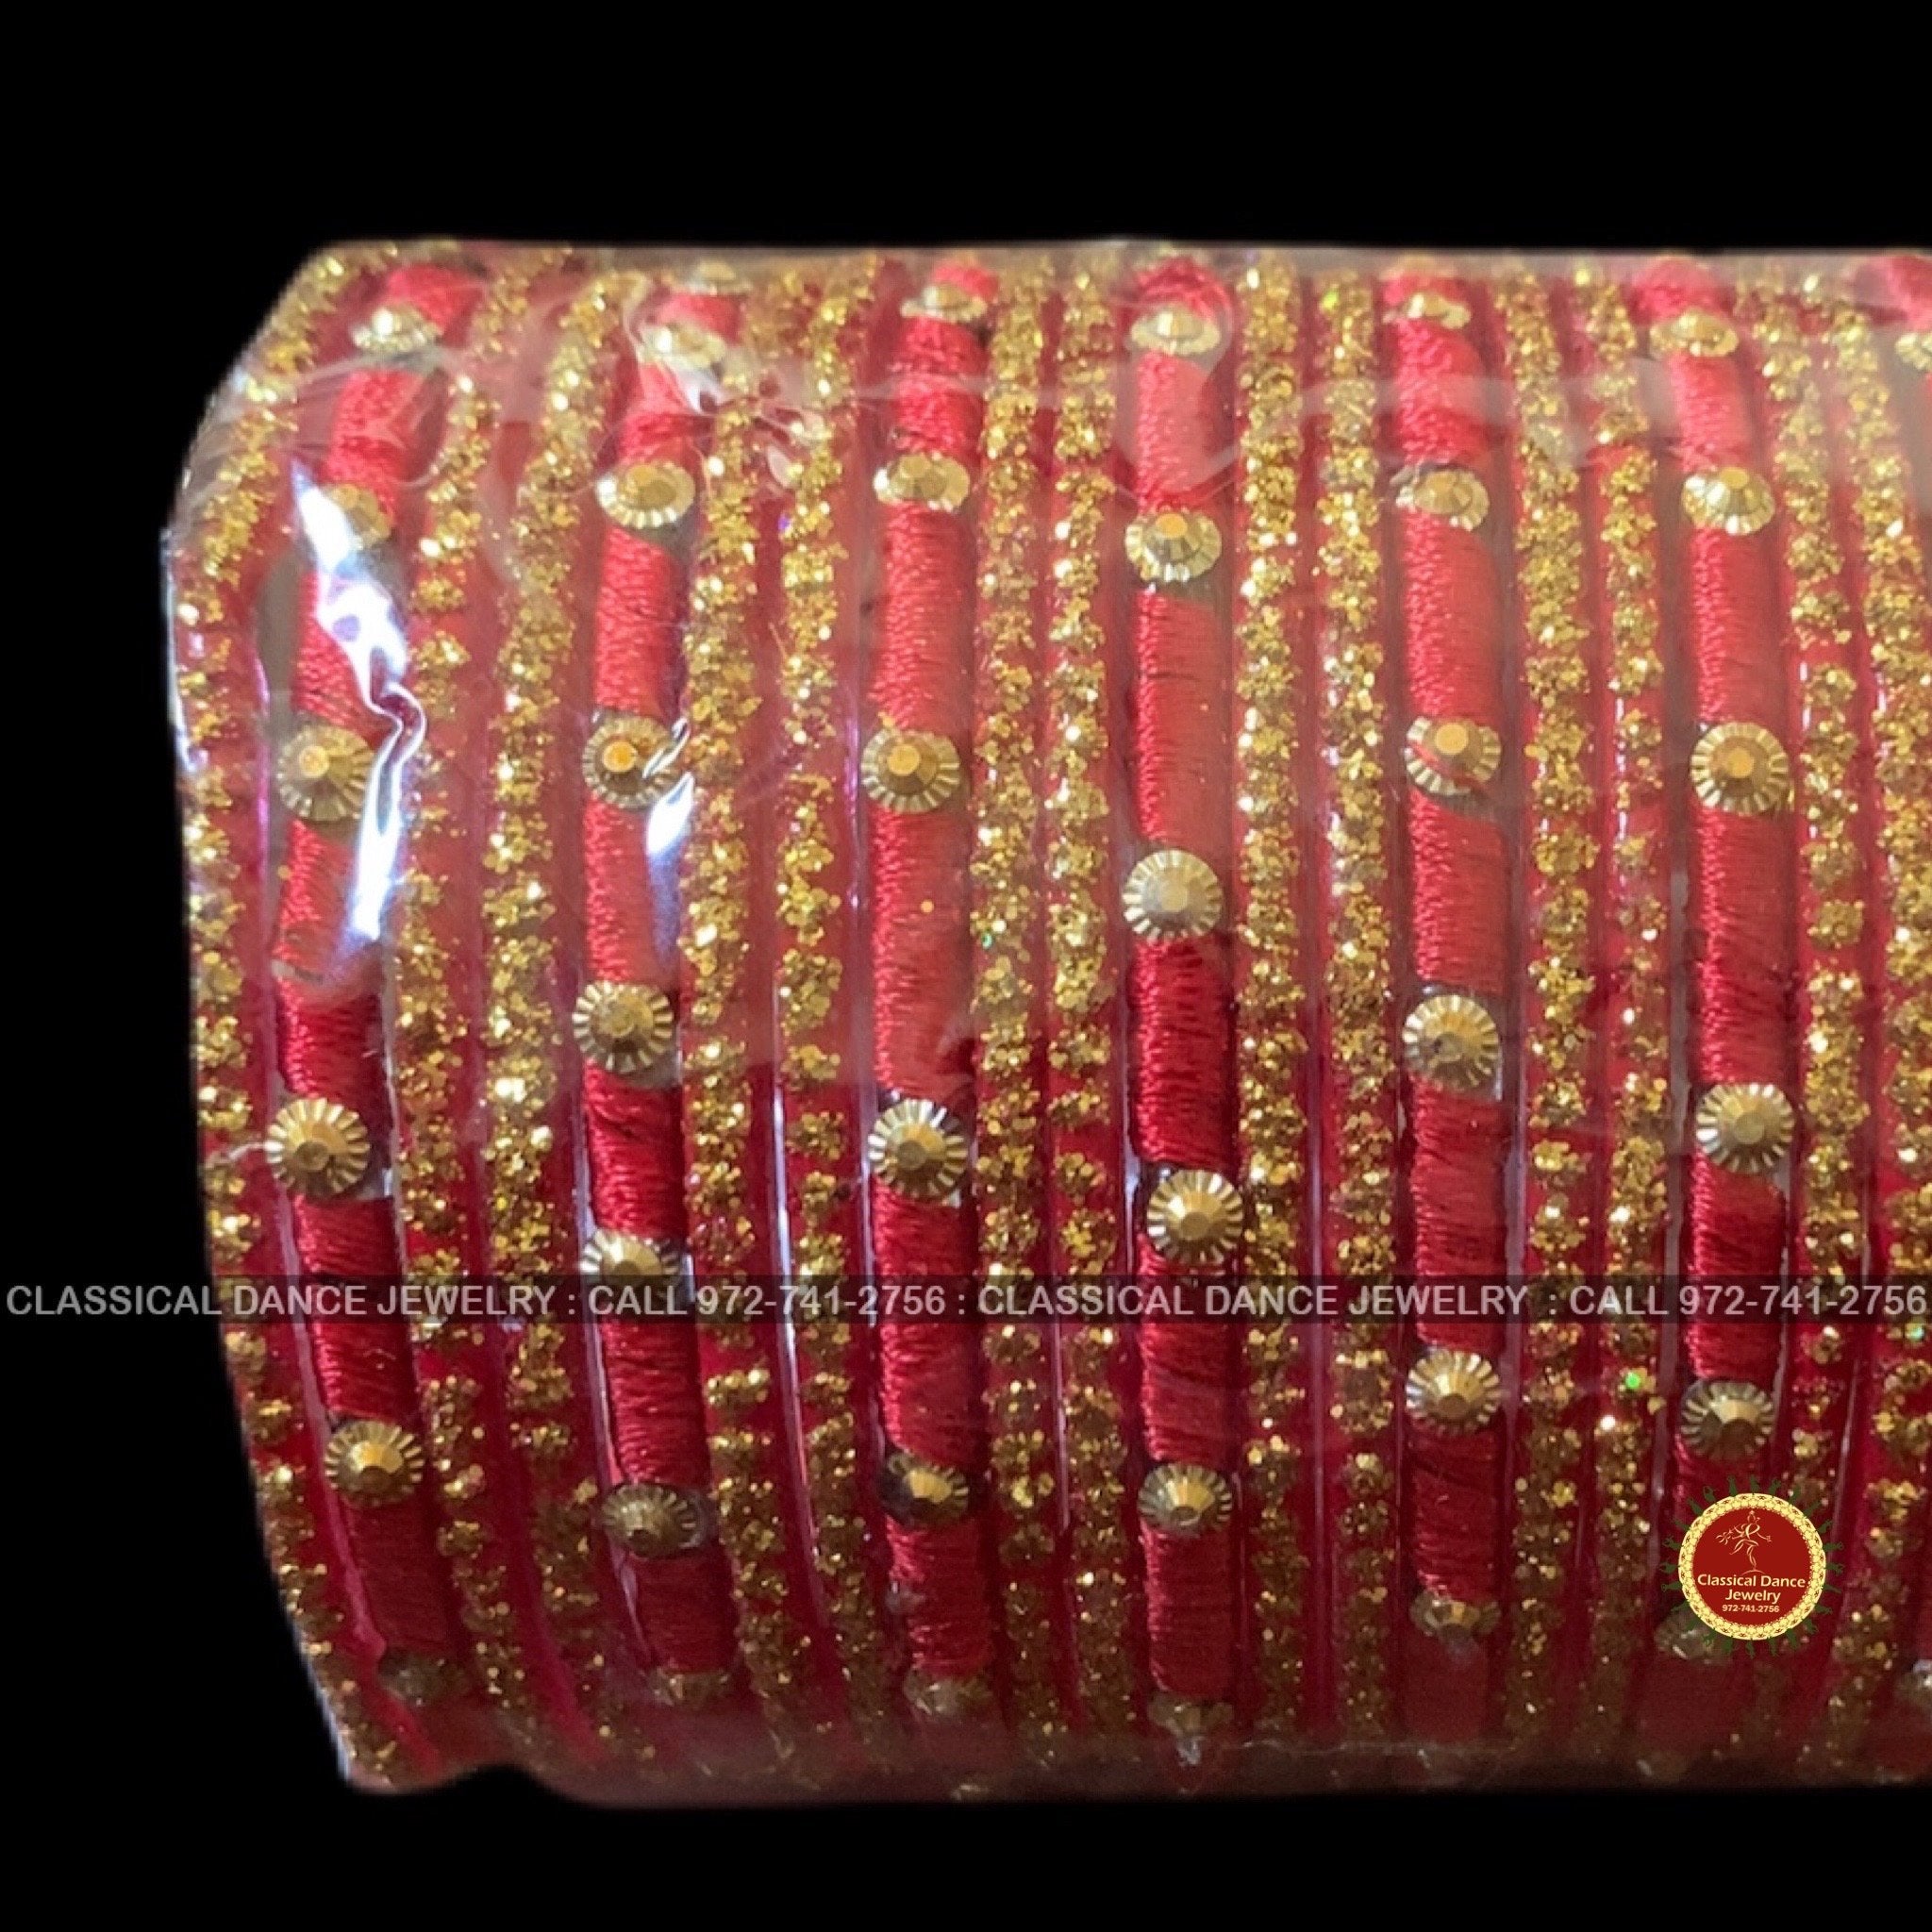 classical dance jewelry belts bangles red color glass bangles set indian matti gajulu seemantham wedding bangles return gift choodi classical dance jewelry 19291437432997